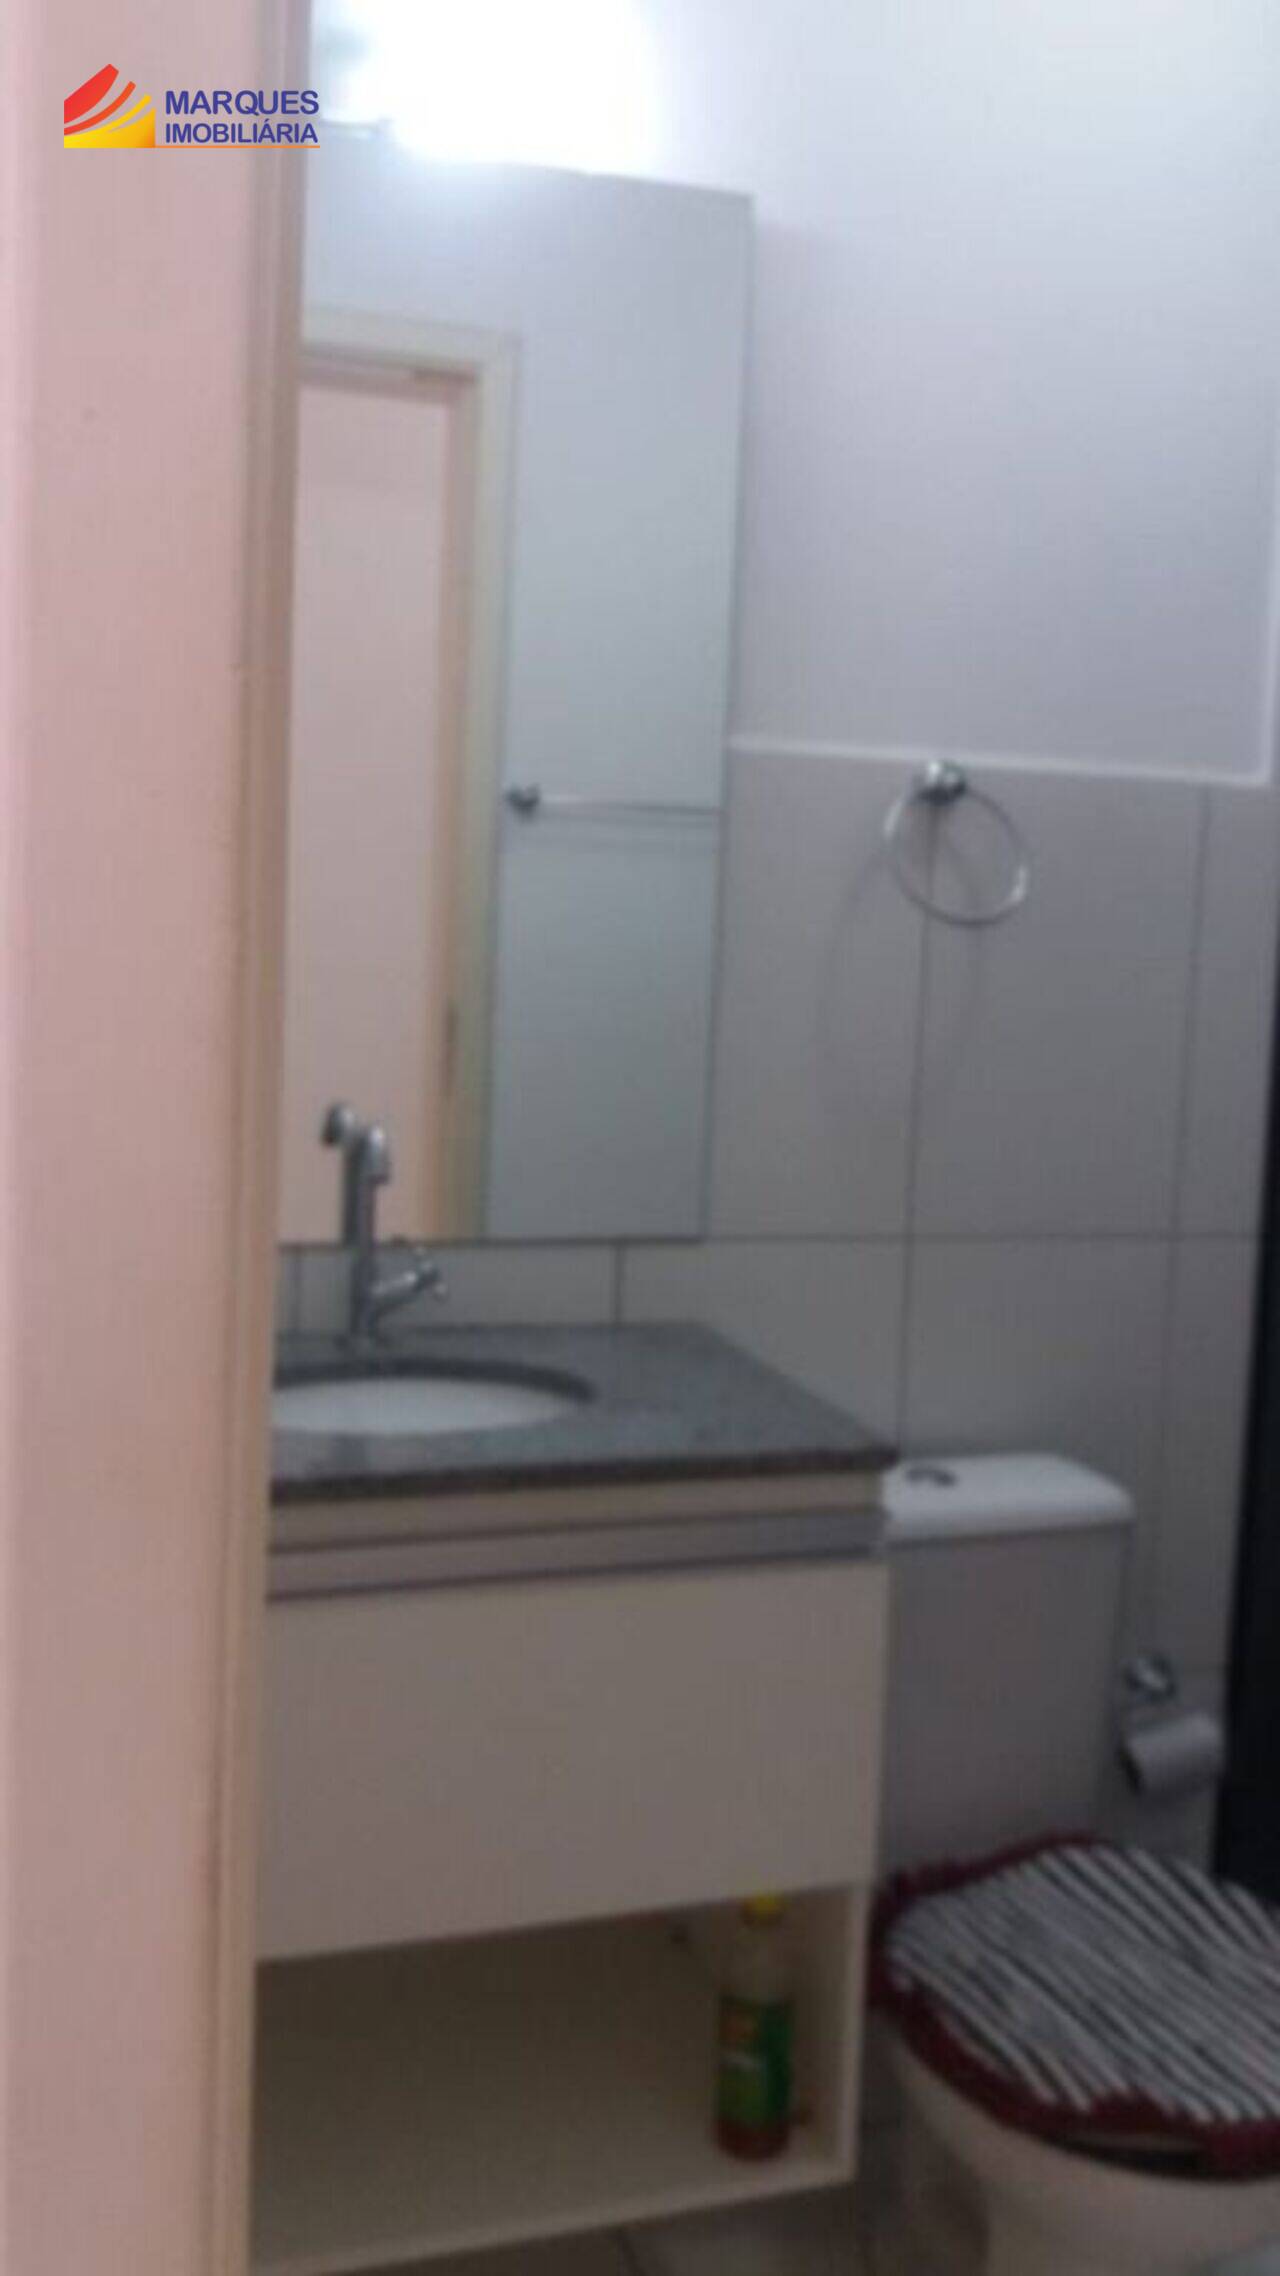 Apartamento Condomínio Spazio Illuminare, Indaiatuba - SP